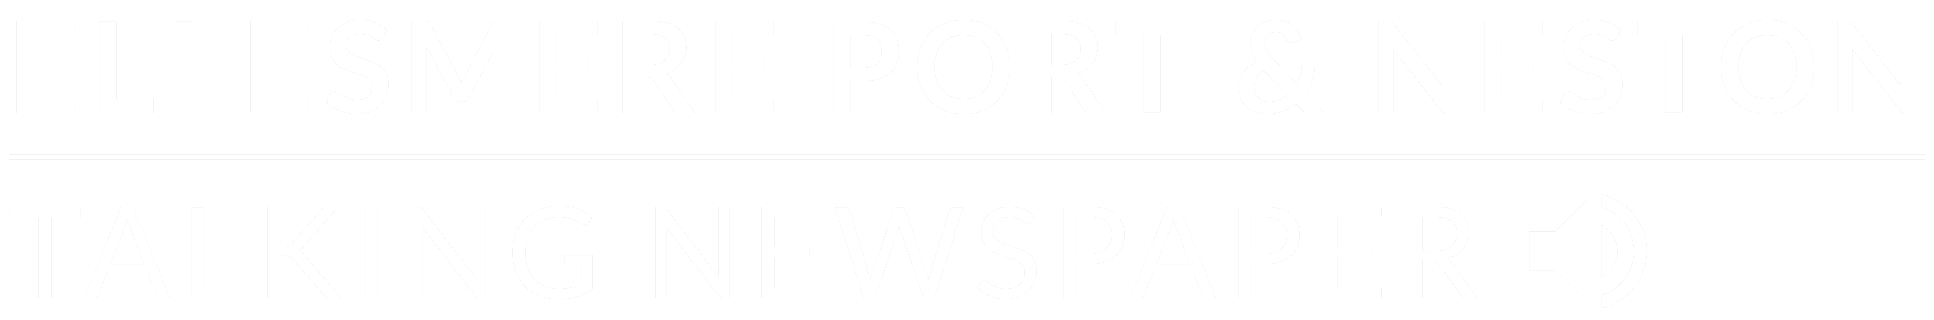 EP&N Talking Newspaper Logo White